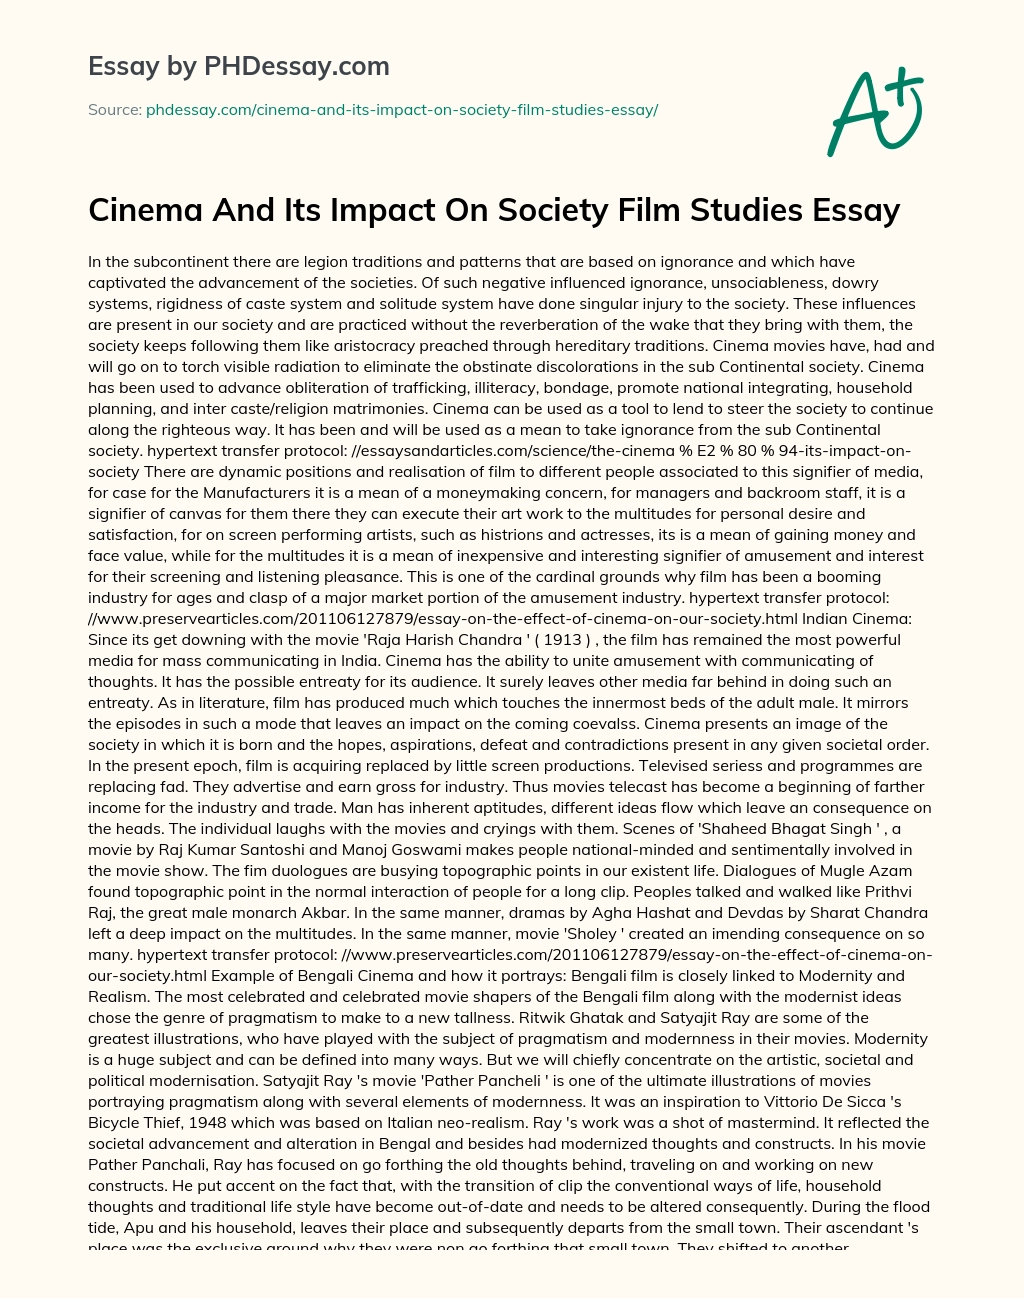 Cinema And Its Impact On Society Film Studies Essay essay